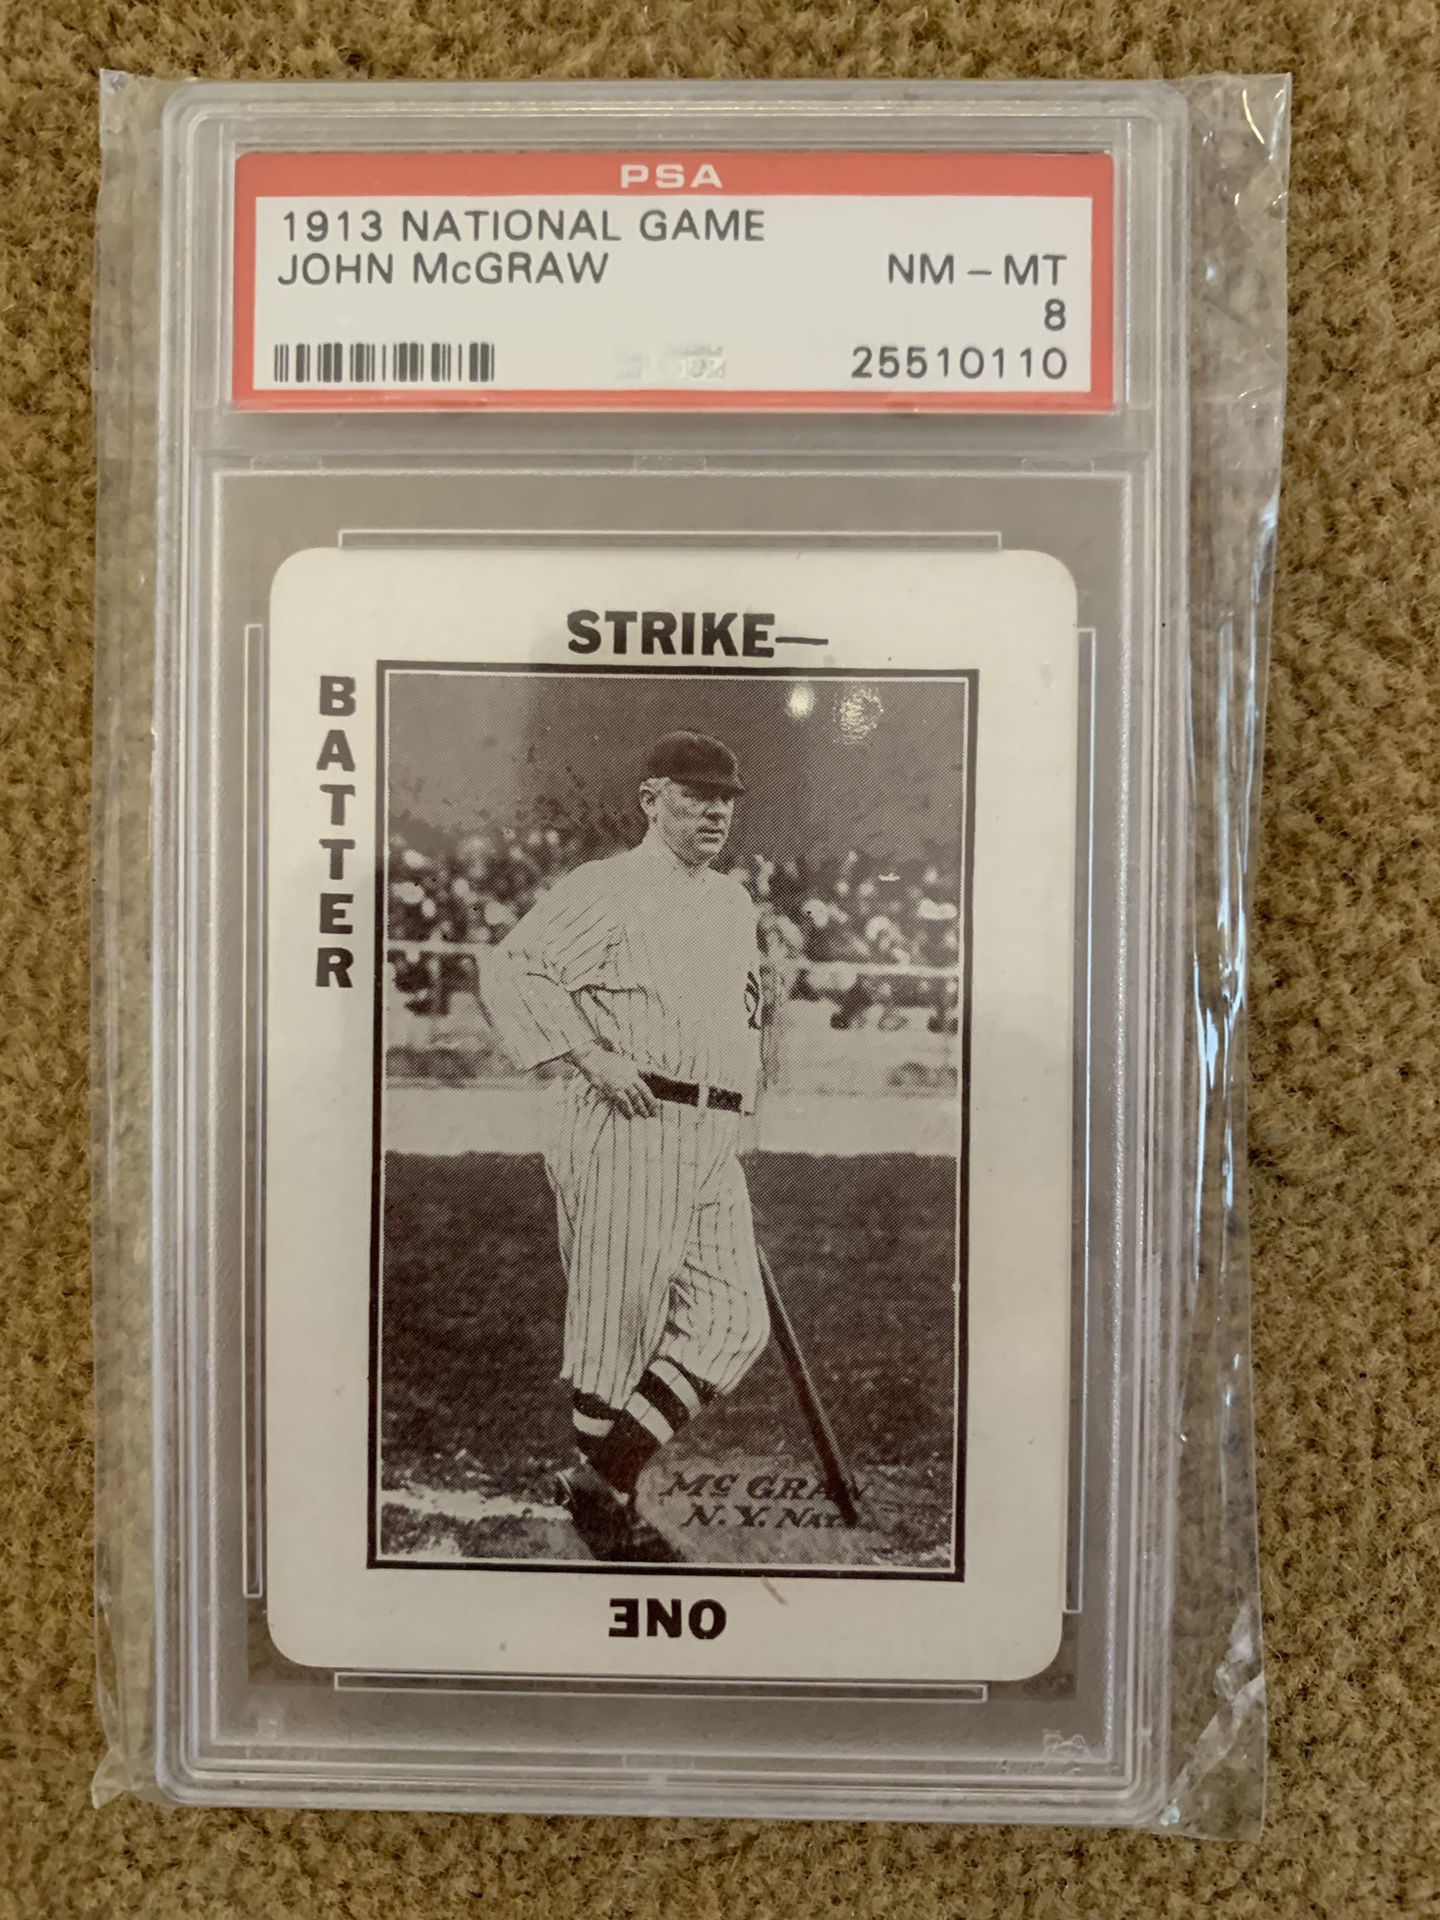 PSA Graded Vintage Baseball Card